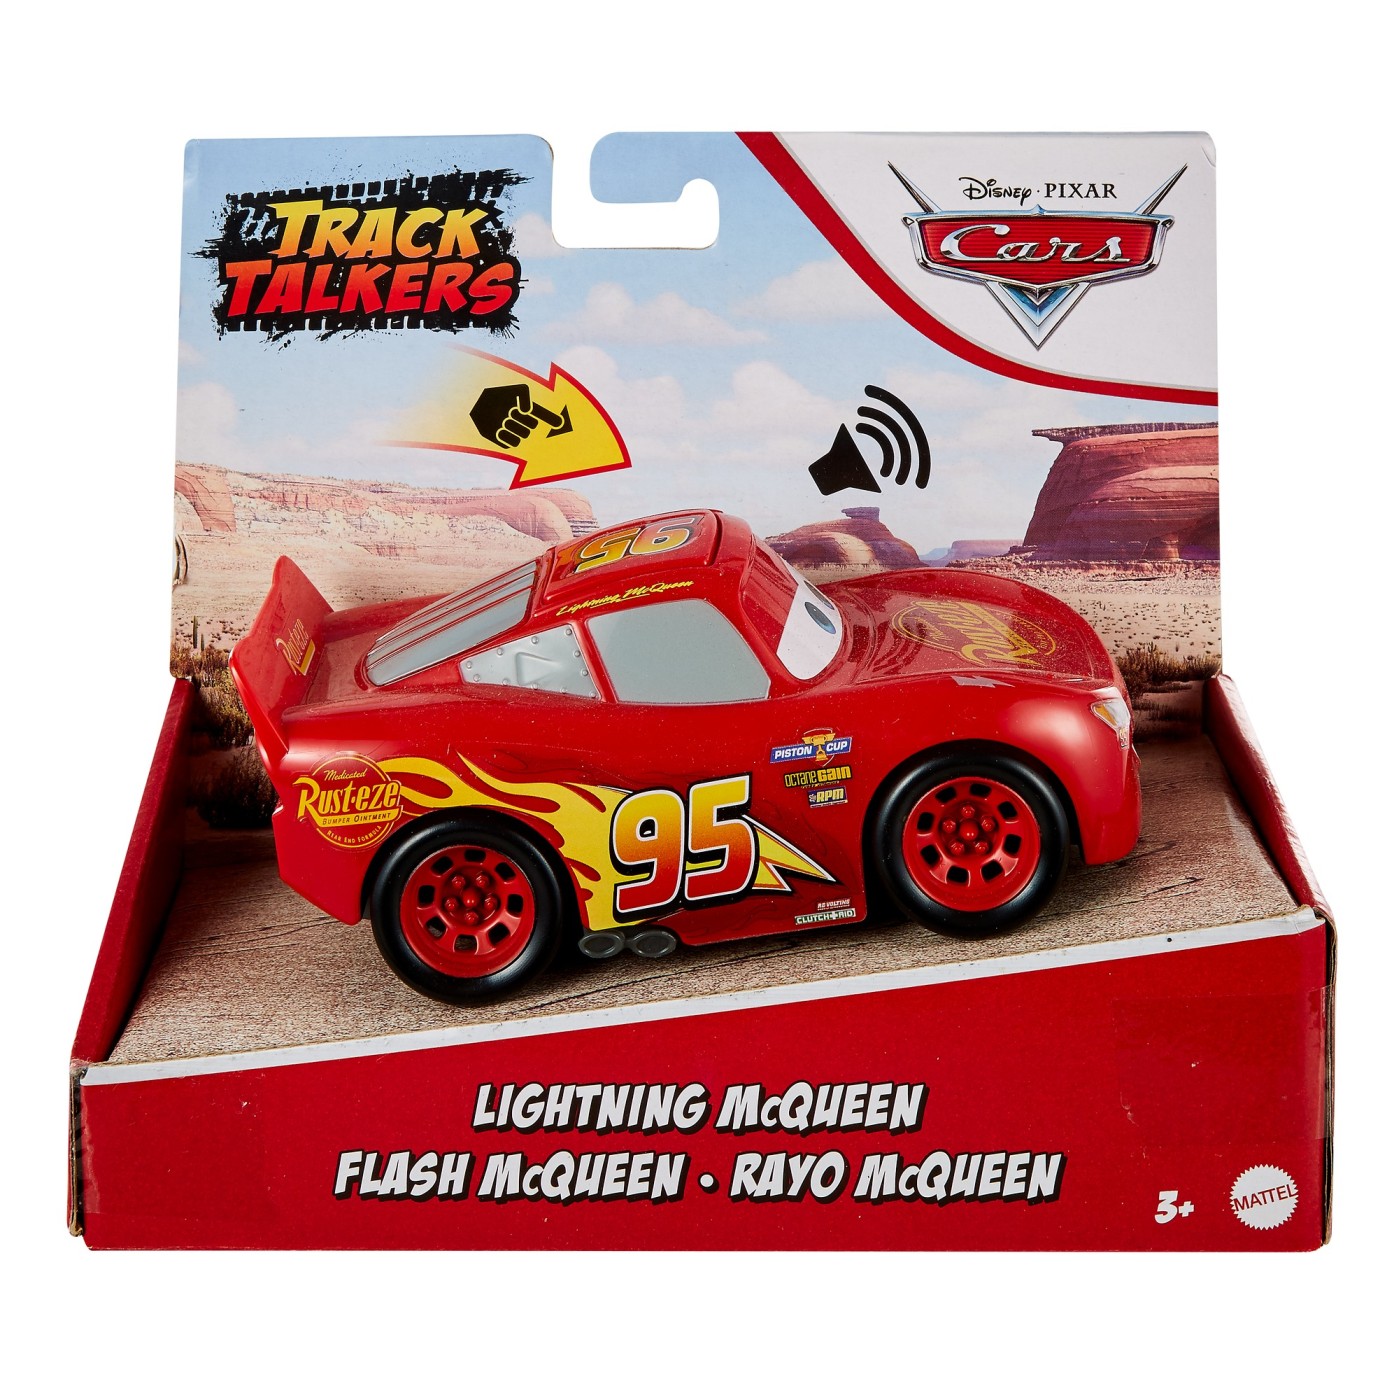 Masina - Disney Cars - Track Talkers: Lighting Mcqueen | Mattel